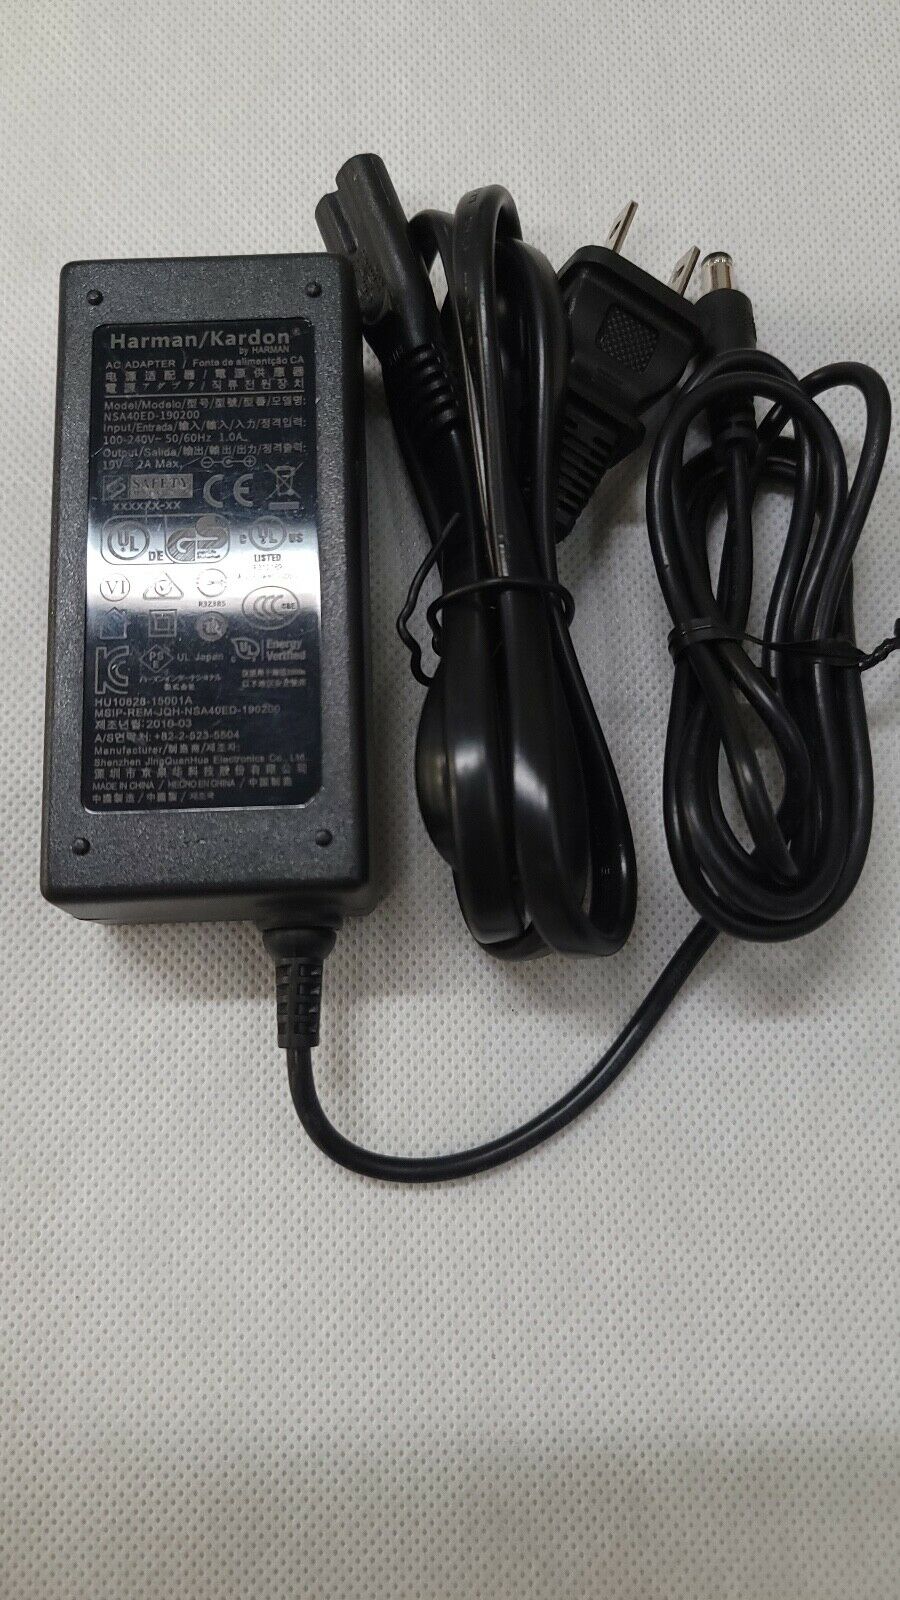 Original Harman Kardon Speaker NSA40ED-190200 AC Power Supply 19V 2A Type: AC Adapter Features: